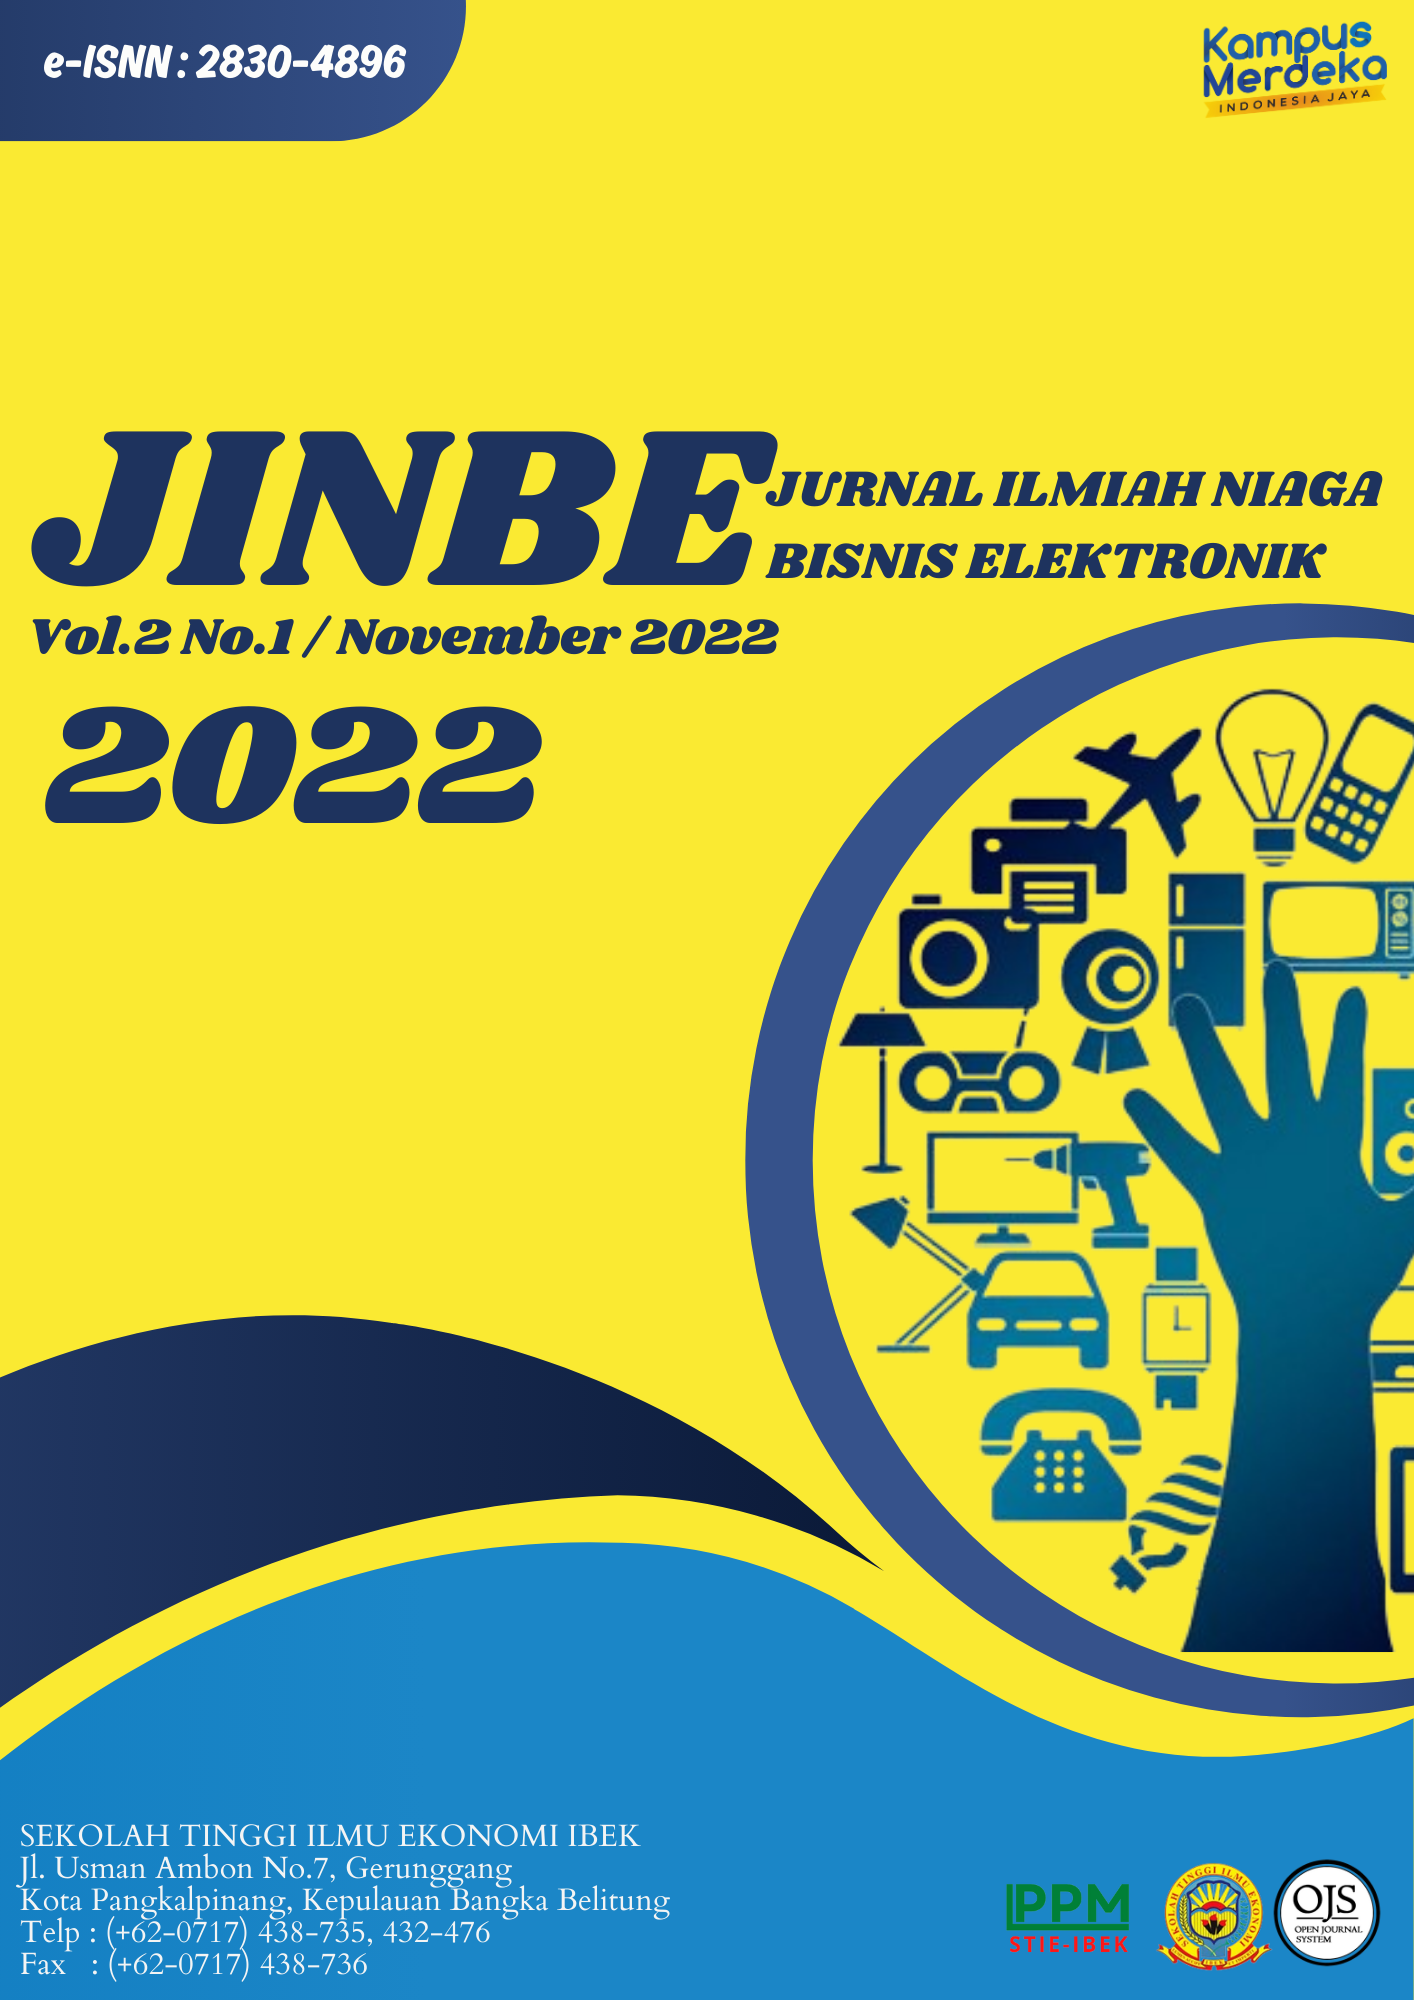 					Lihat Vol 2 No 1 (2022): JURNAL ILMIAH NIAGA BISNIS ELEKTRONIK
				